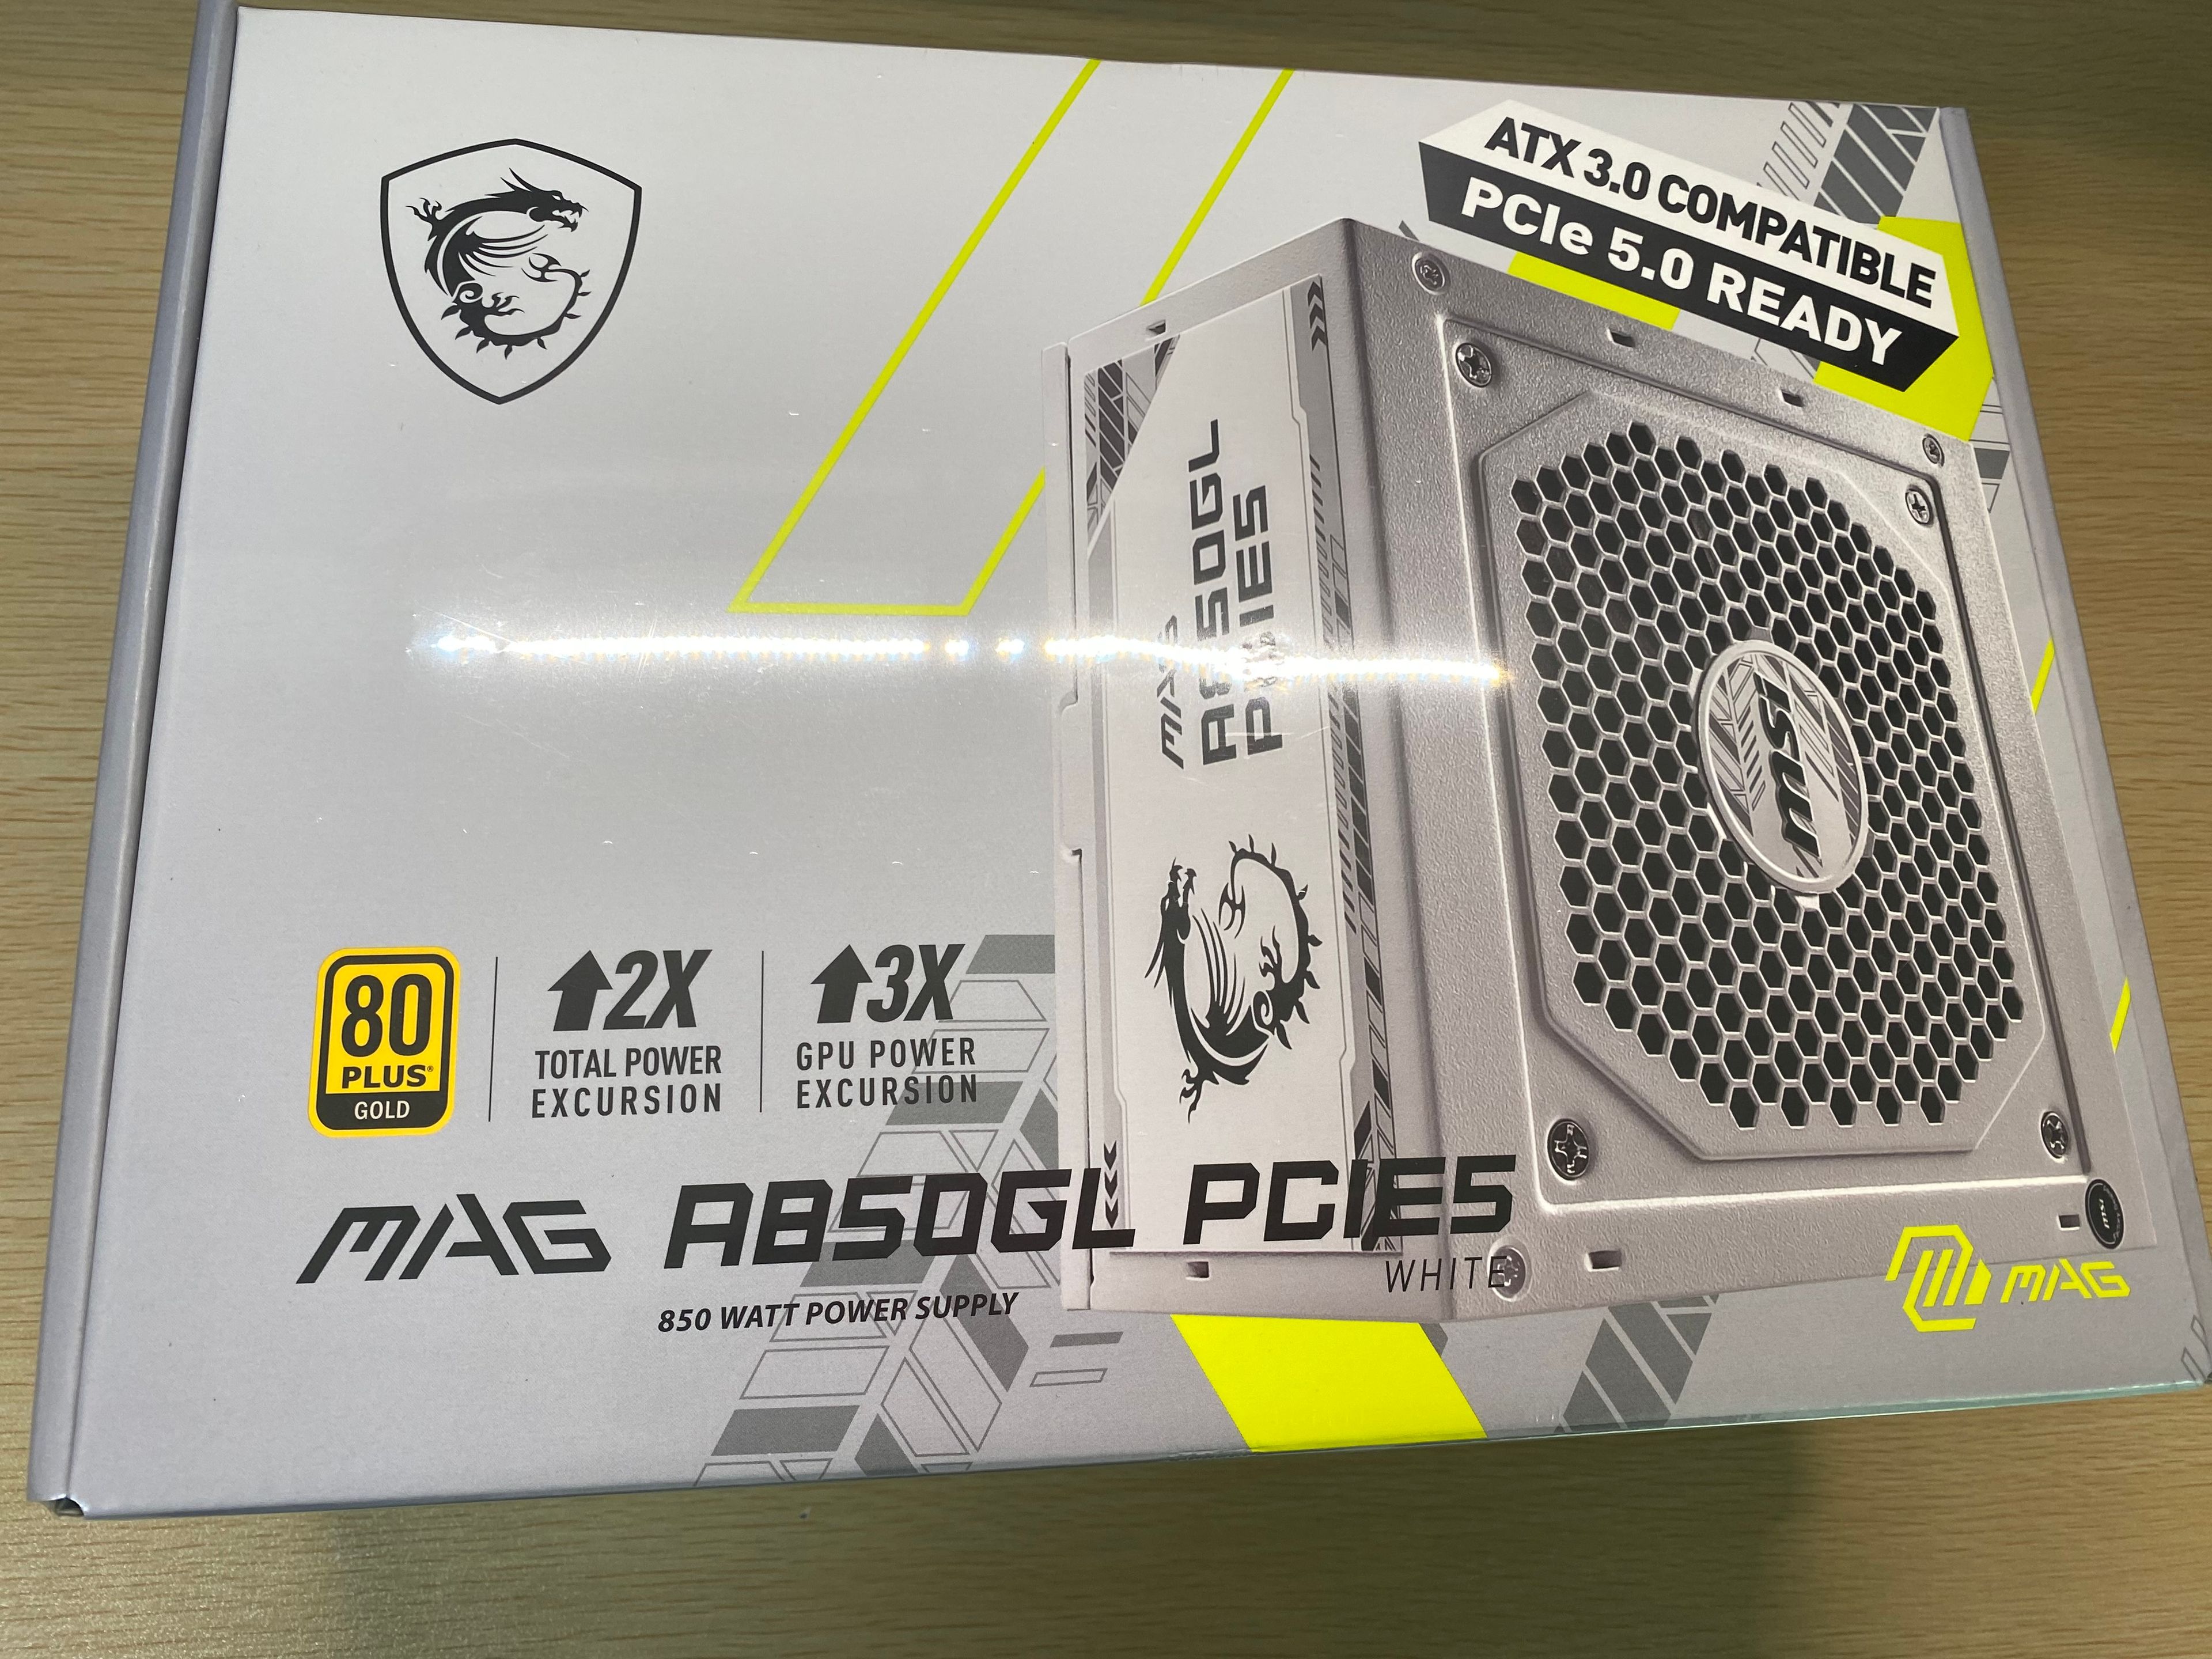 MAG A850GL PCIE5 WHITE